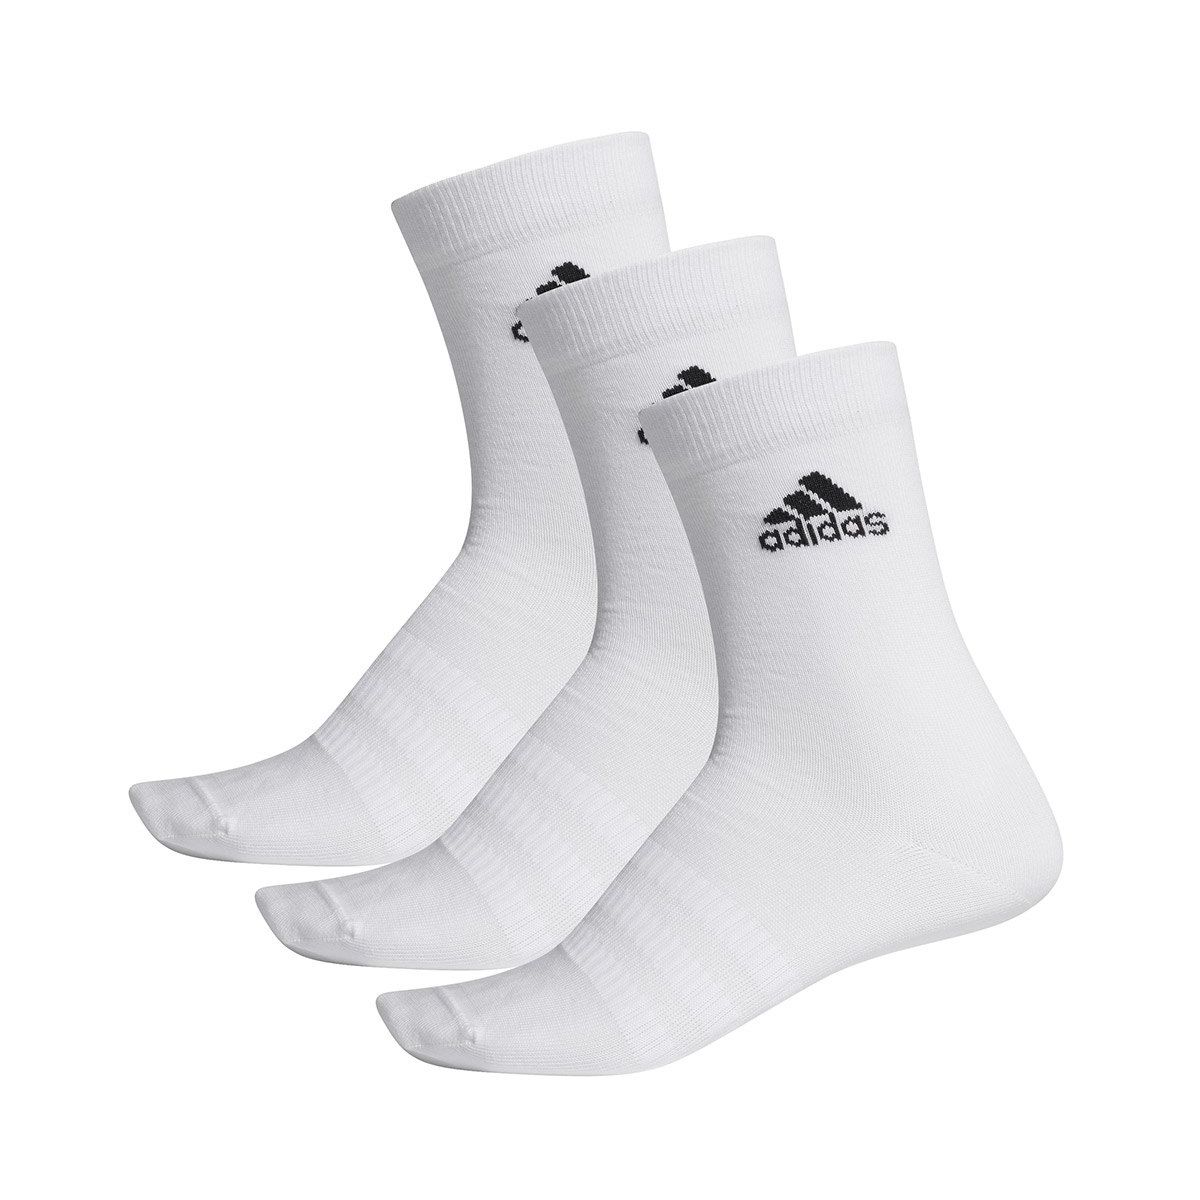 adidas Light Crew Sport Socks x 3 DZ9393